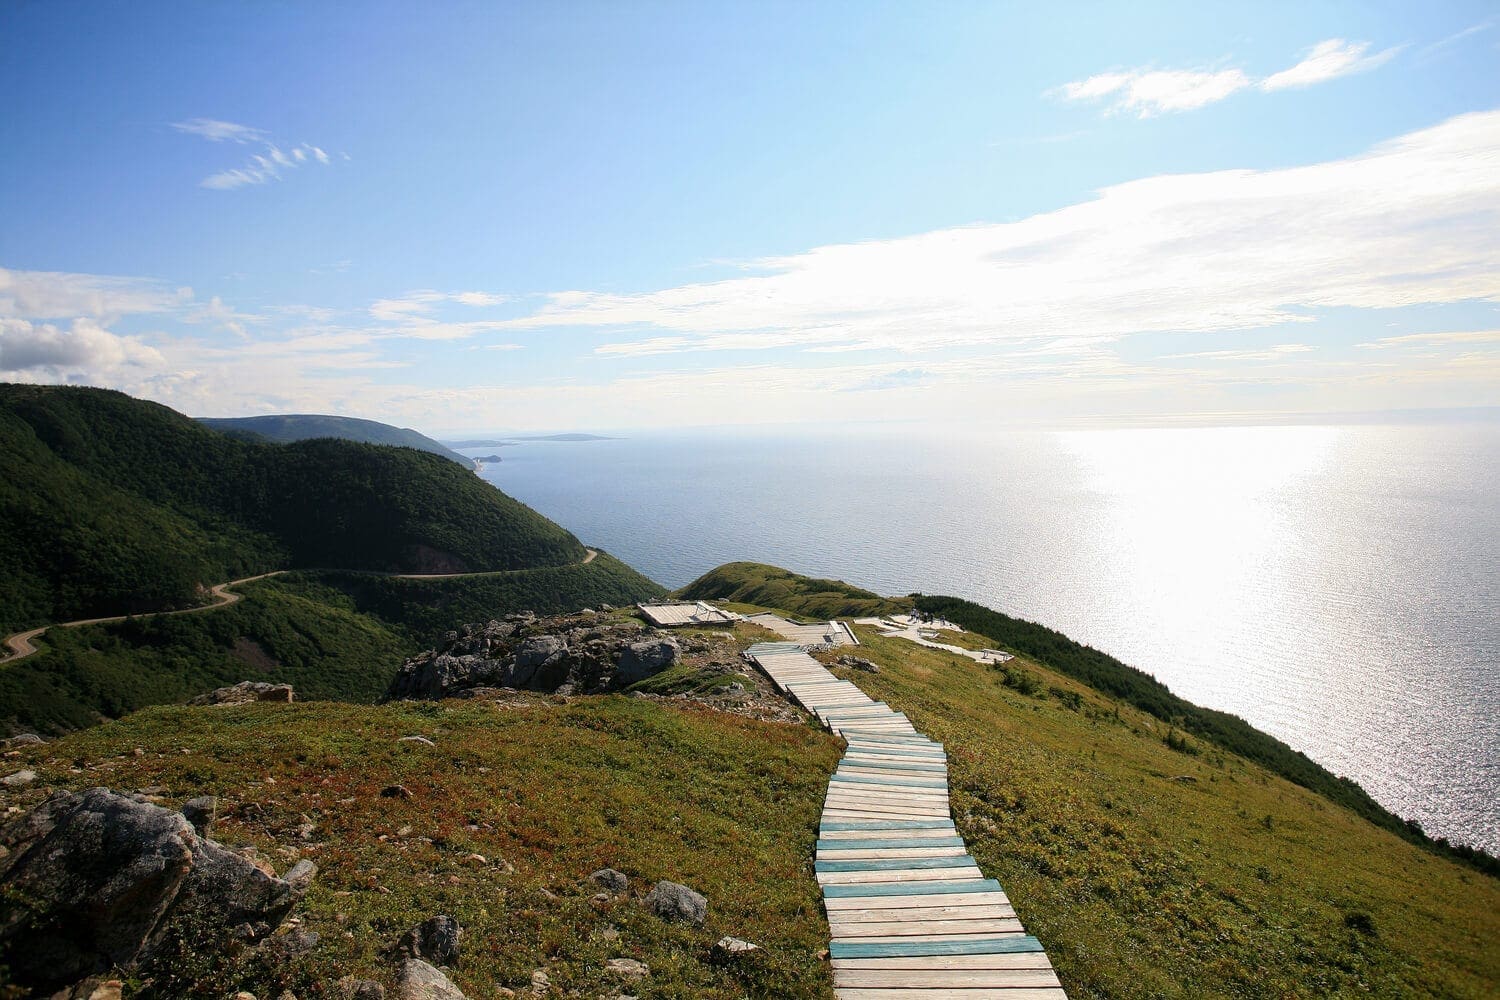 A beautiful vista of the Atlantic Ocean as seen from Cape Breton Island.